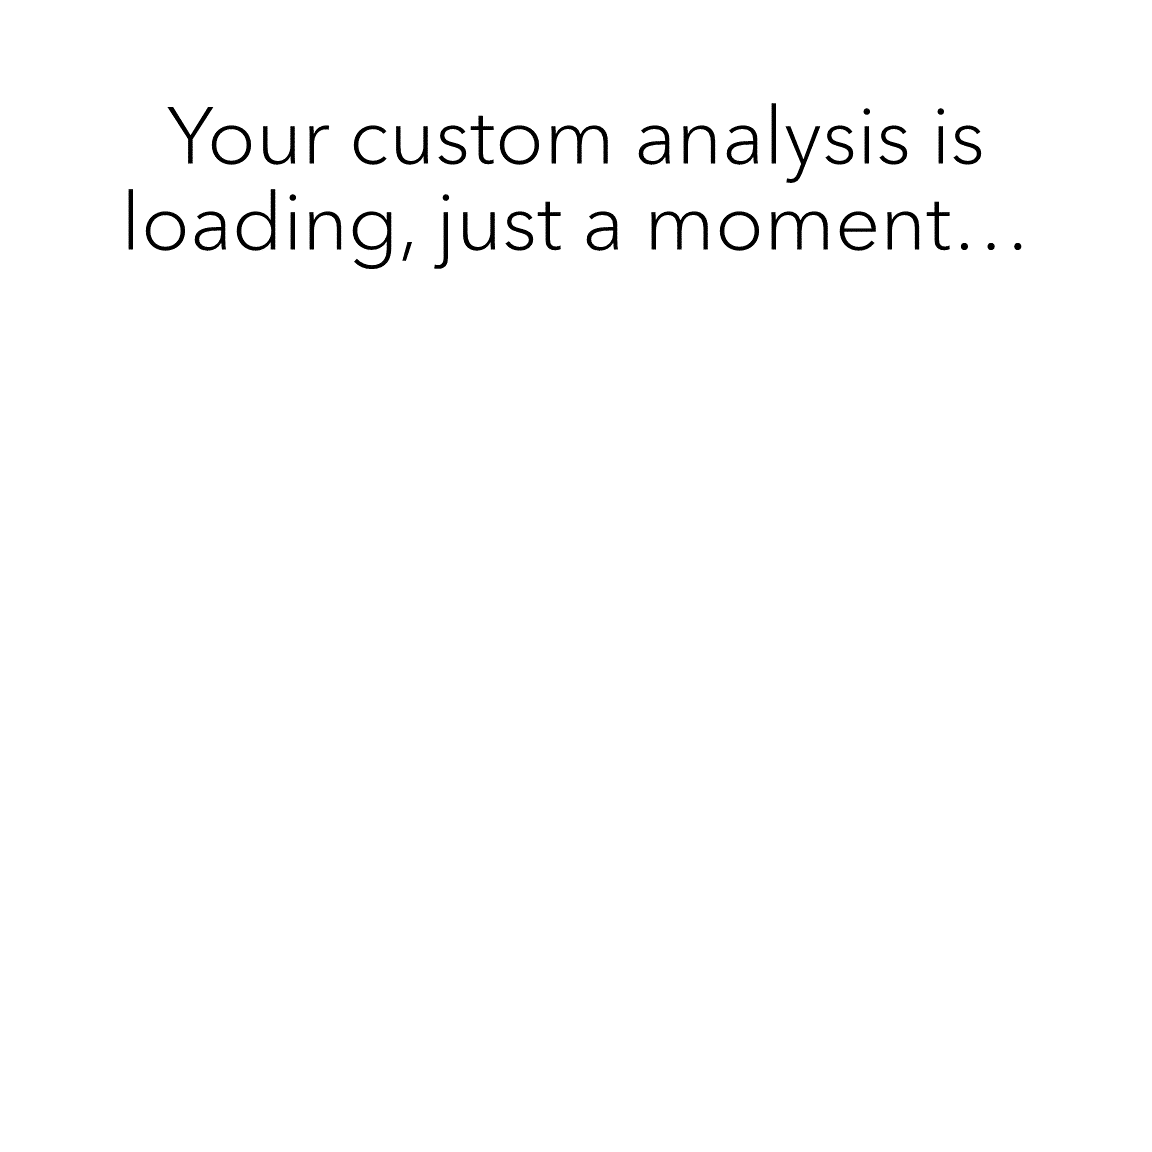 Your custom analysis is loading